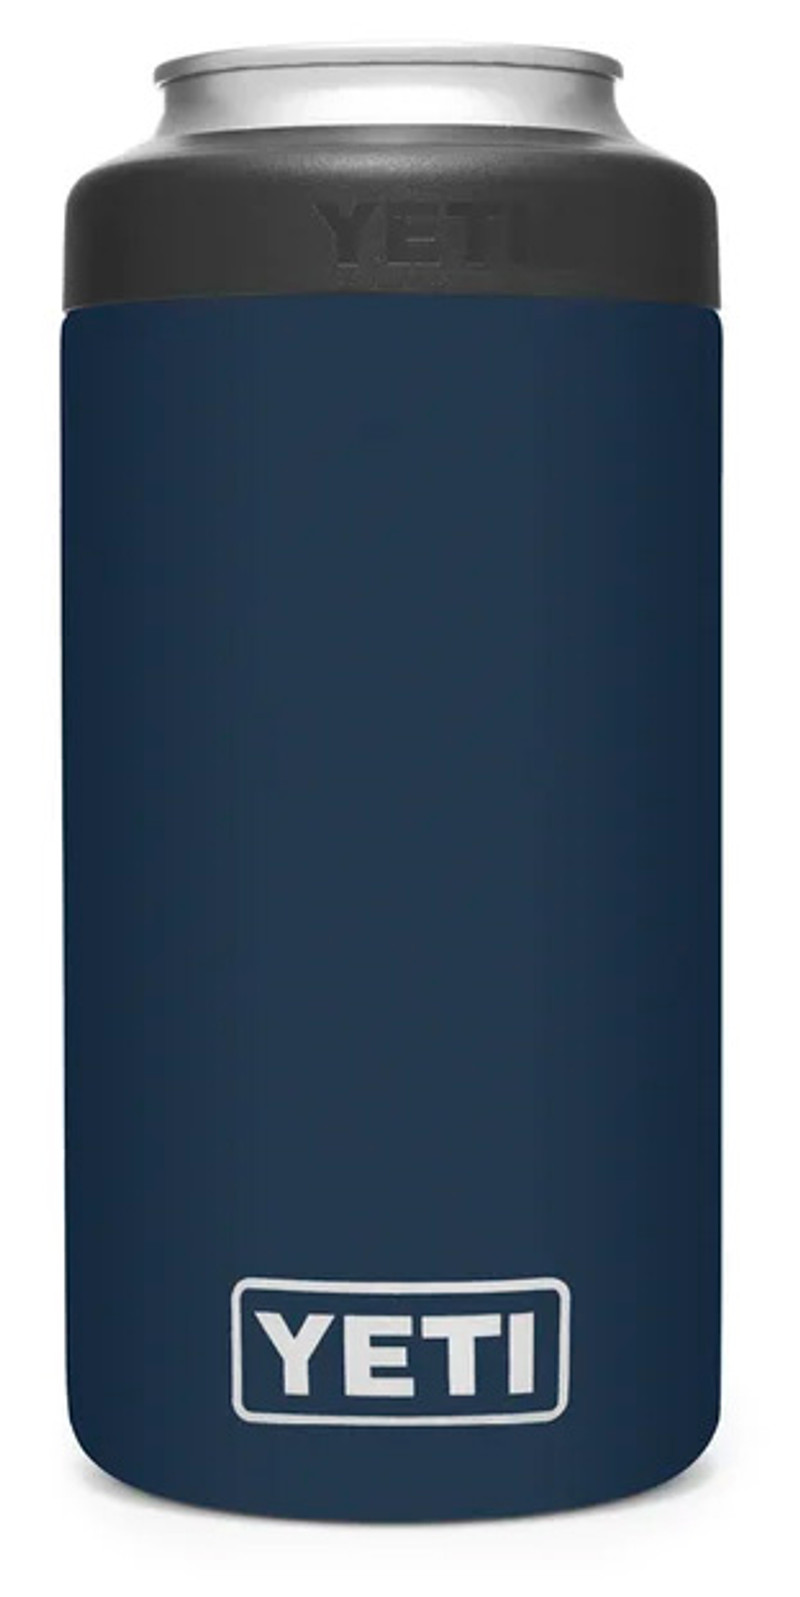 Yeti 16 oz. Rambler Colster Tall Can Insulator, Aquifer Blue